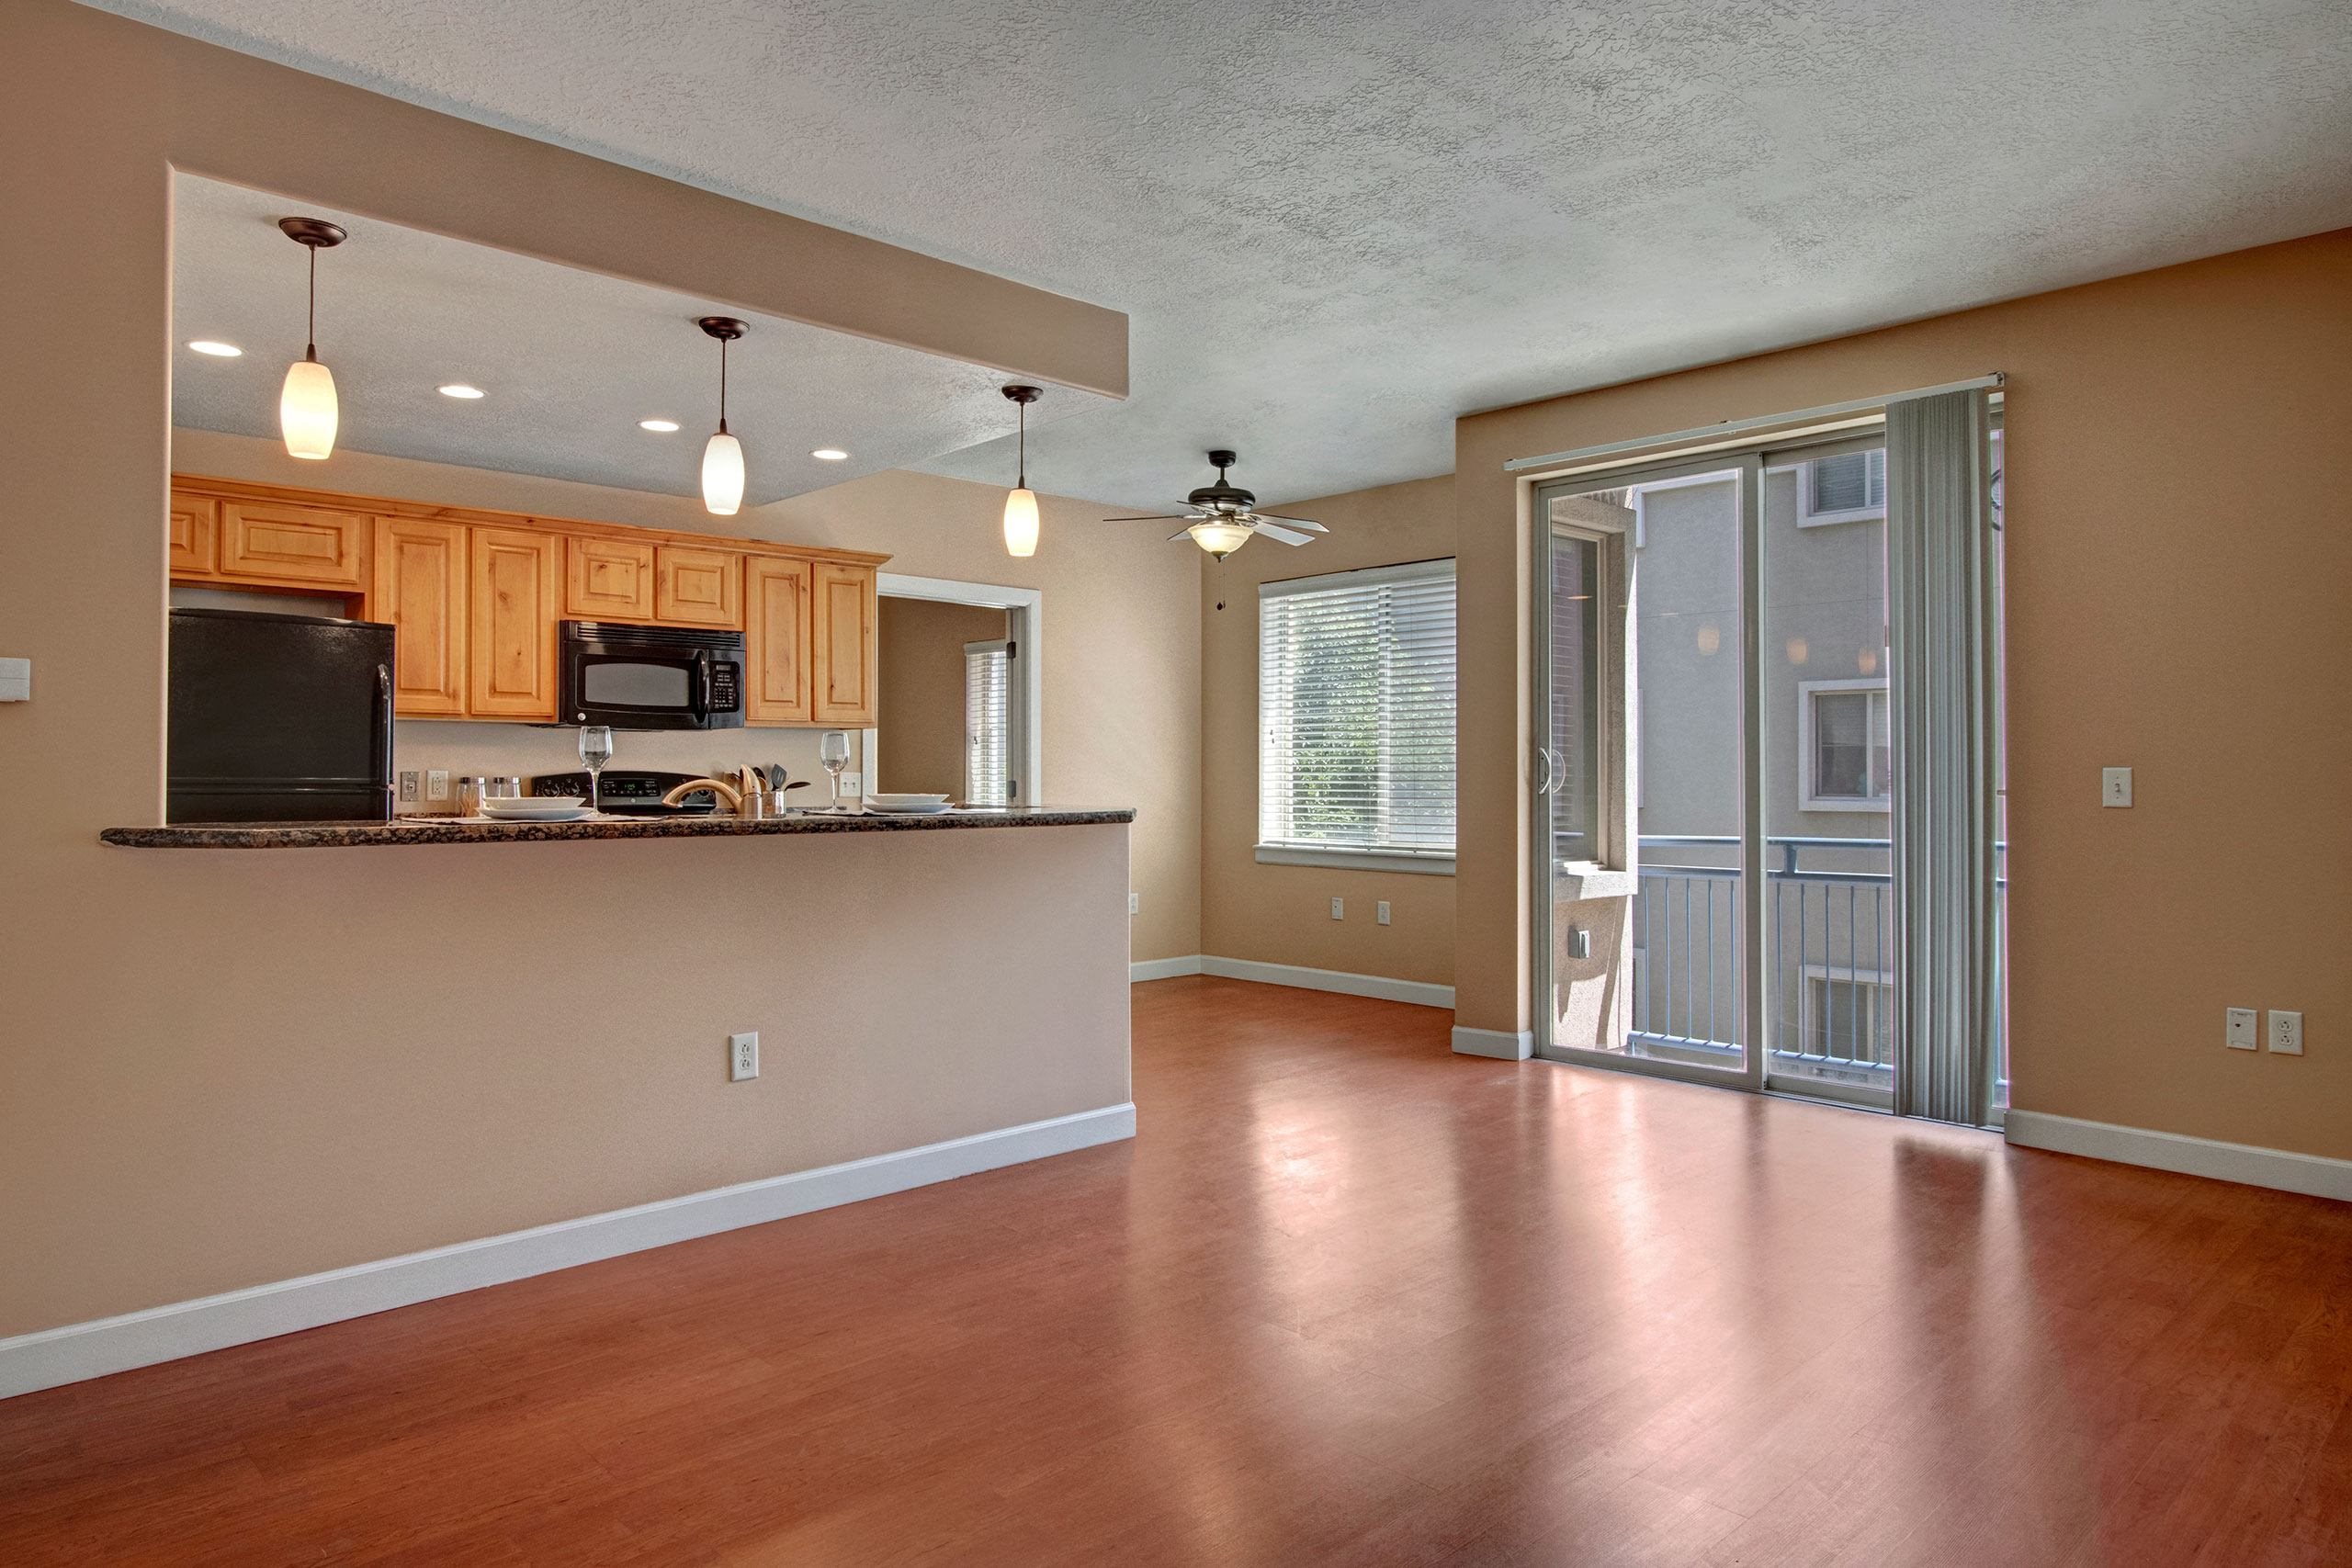 Bridges - kitchen and living room, Weidner Real Estate Properties